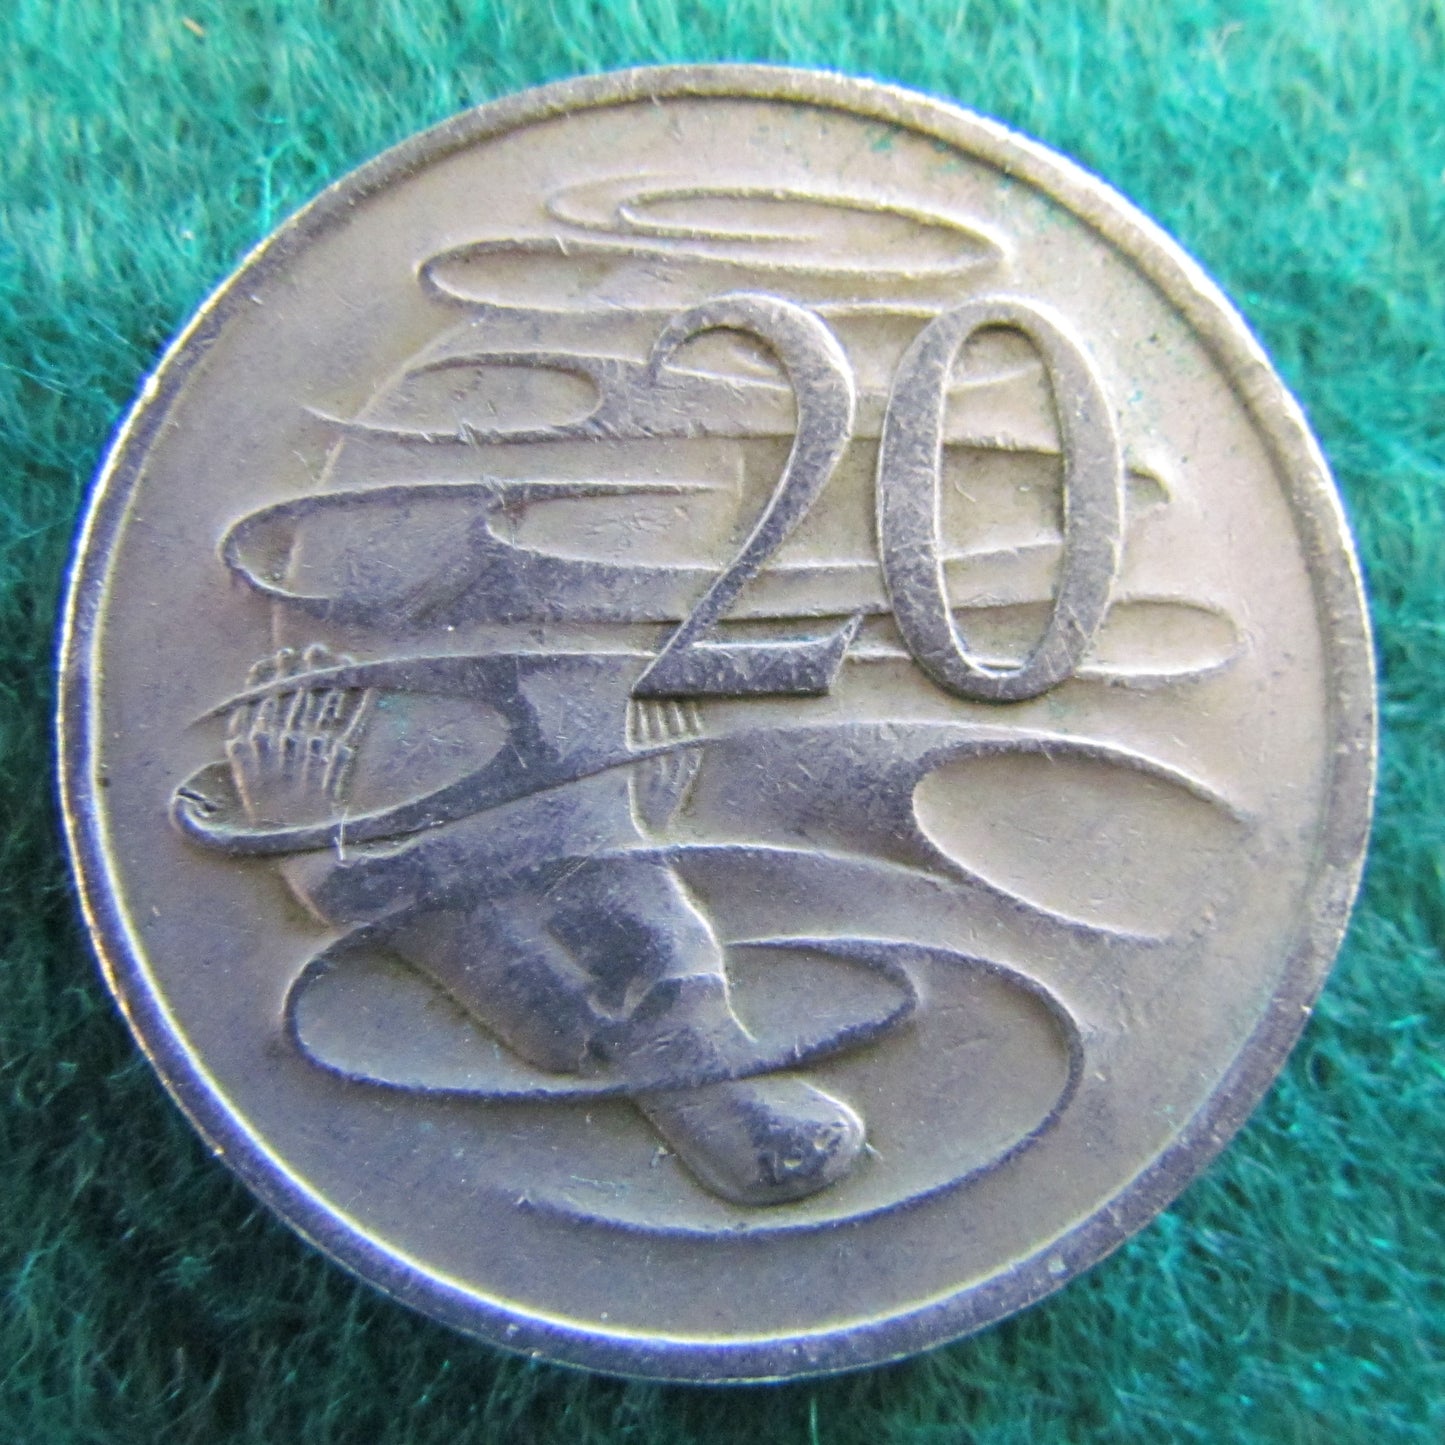 Australian 1972 20 Cent Queen Elizabeth Coin - Circulated